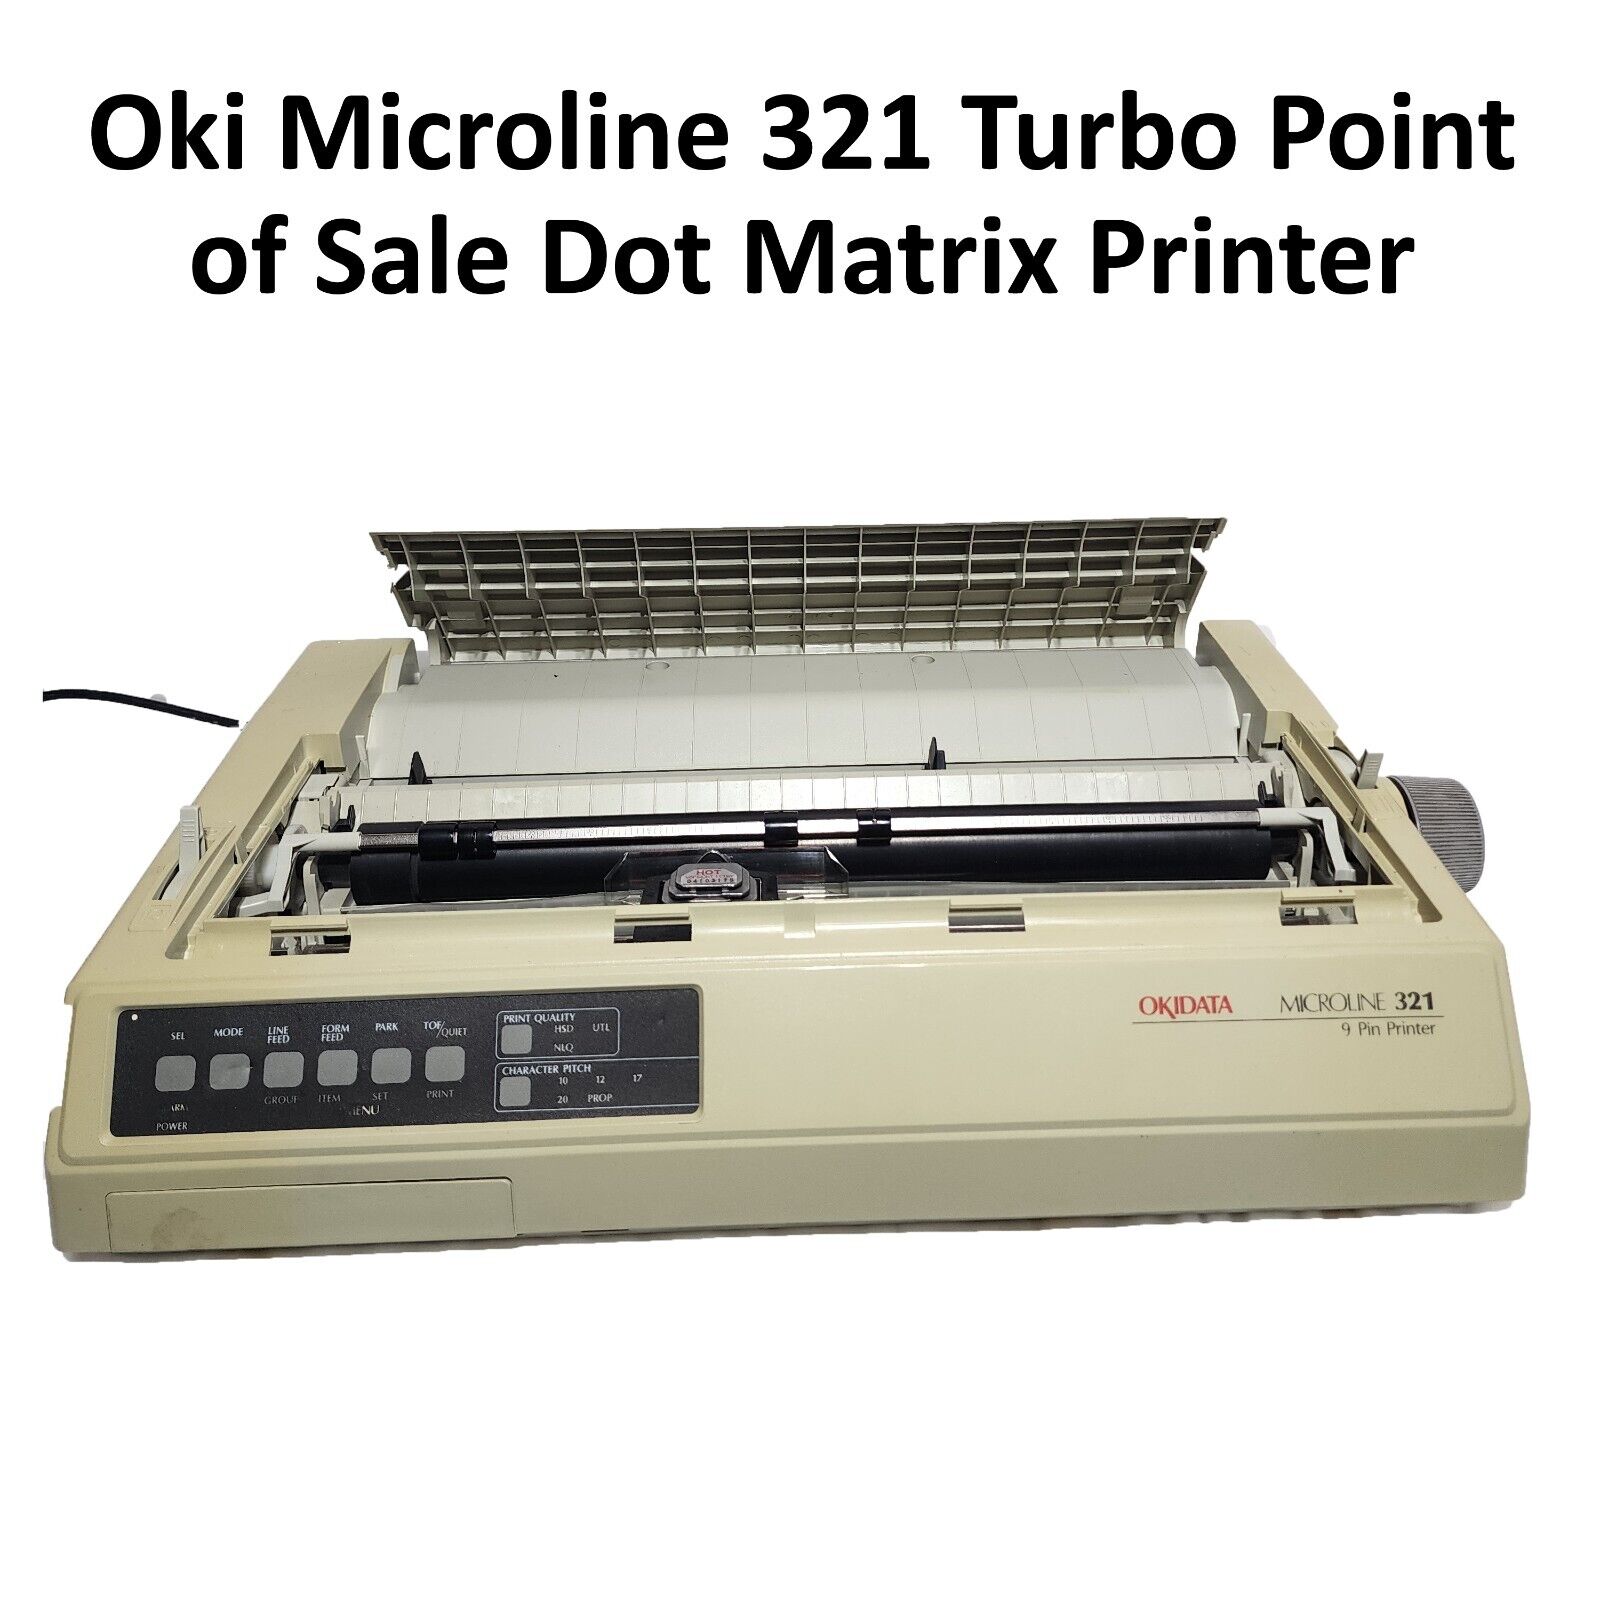 Oki Microline 321 Turbo Point of Sale Dot Matrix Printer